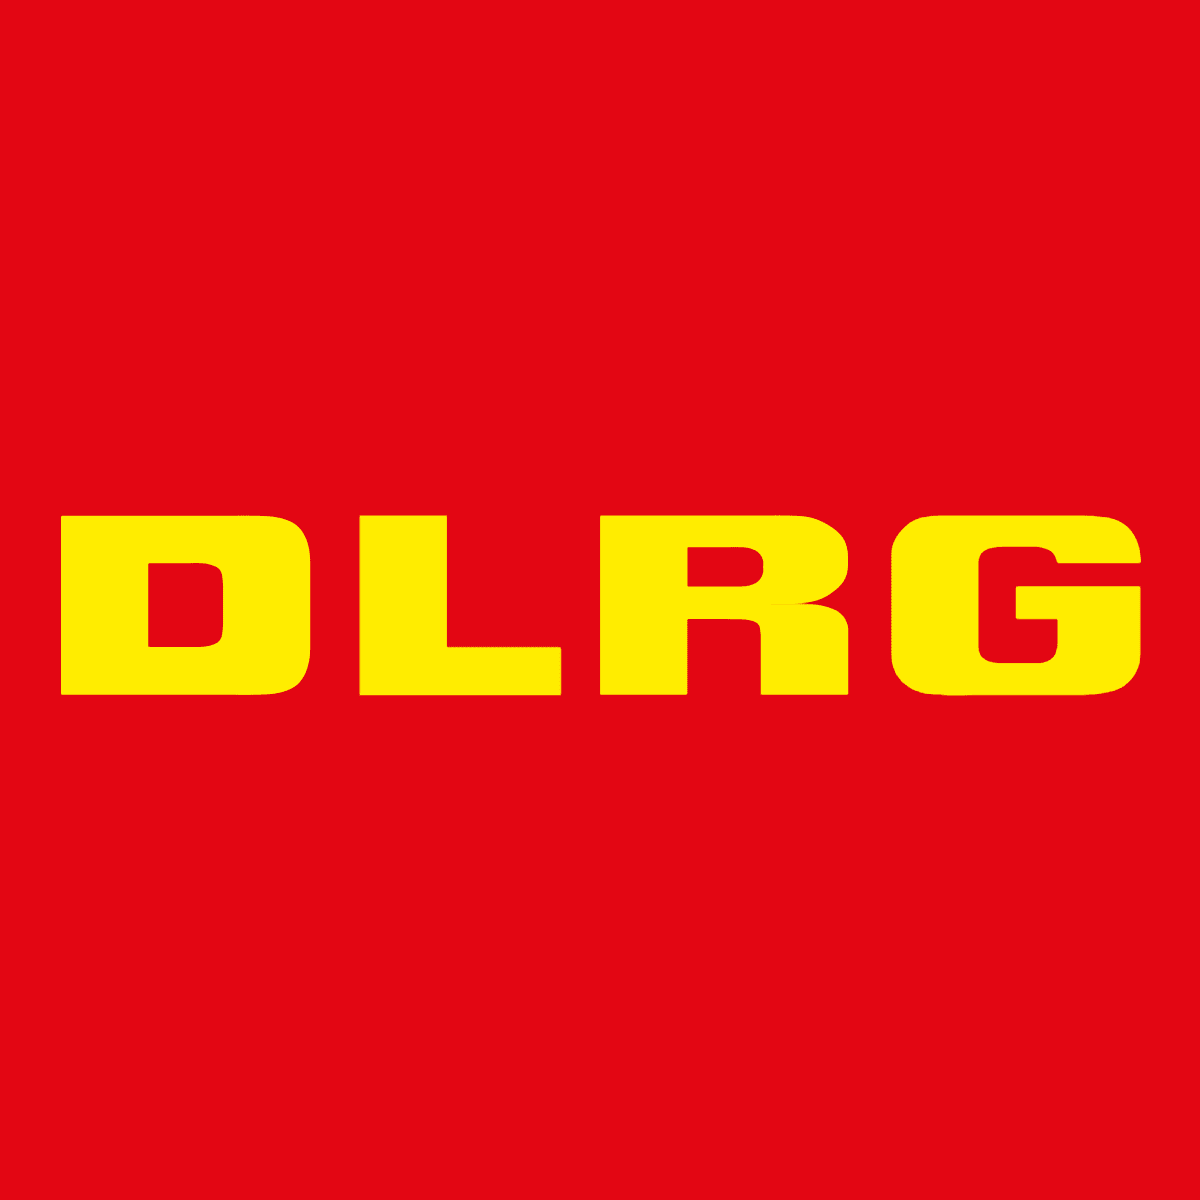 Logo DLRG